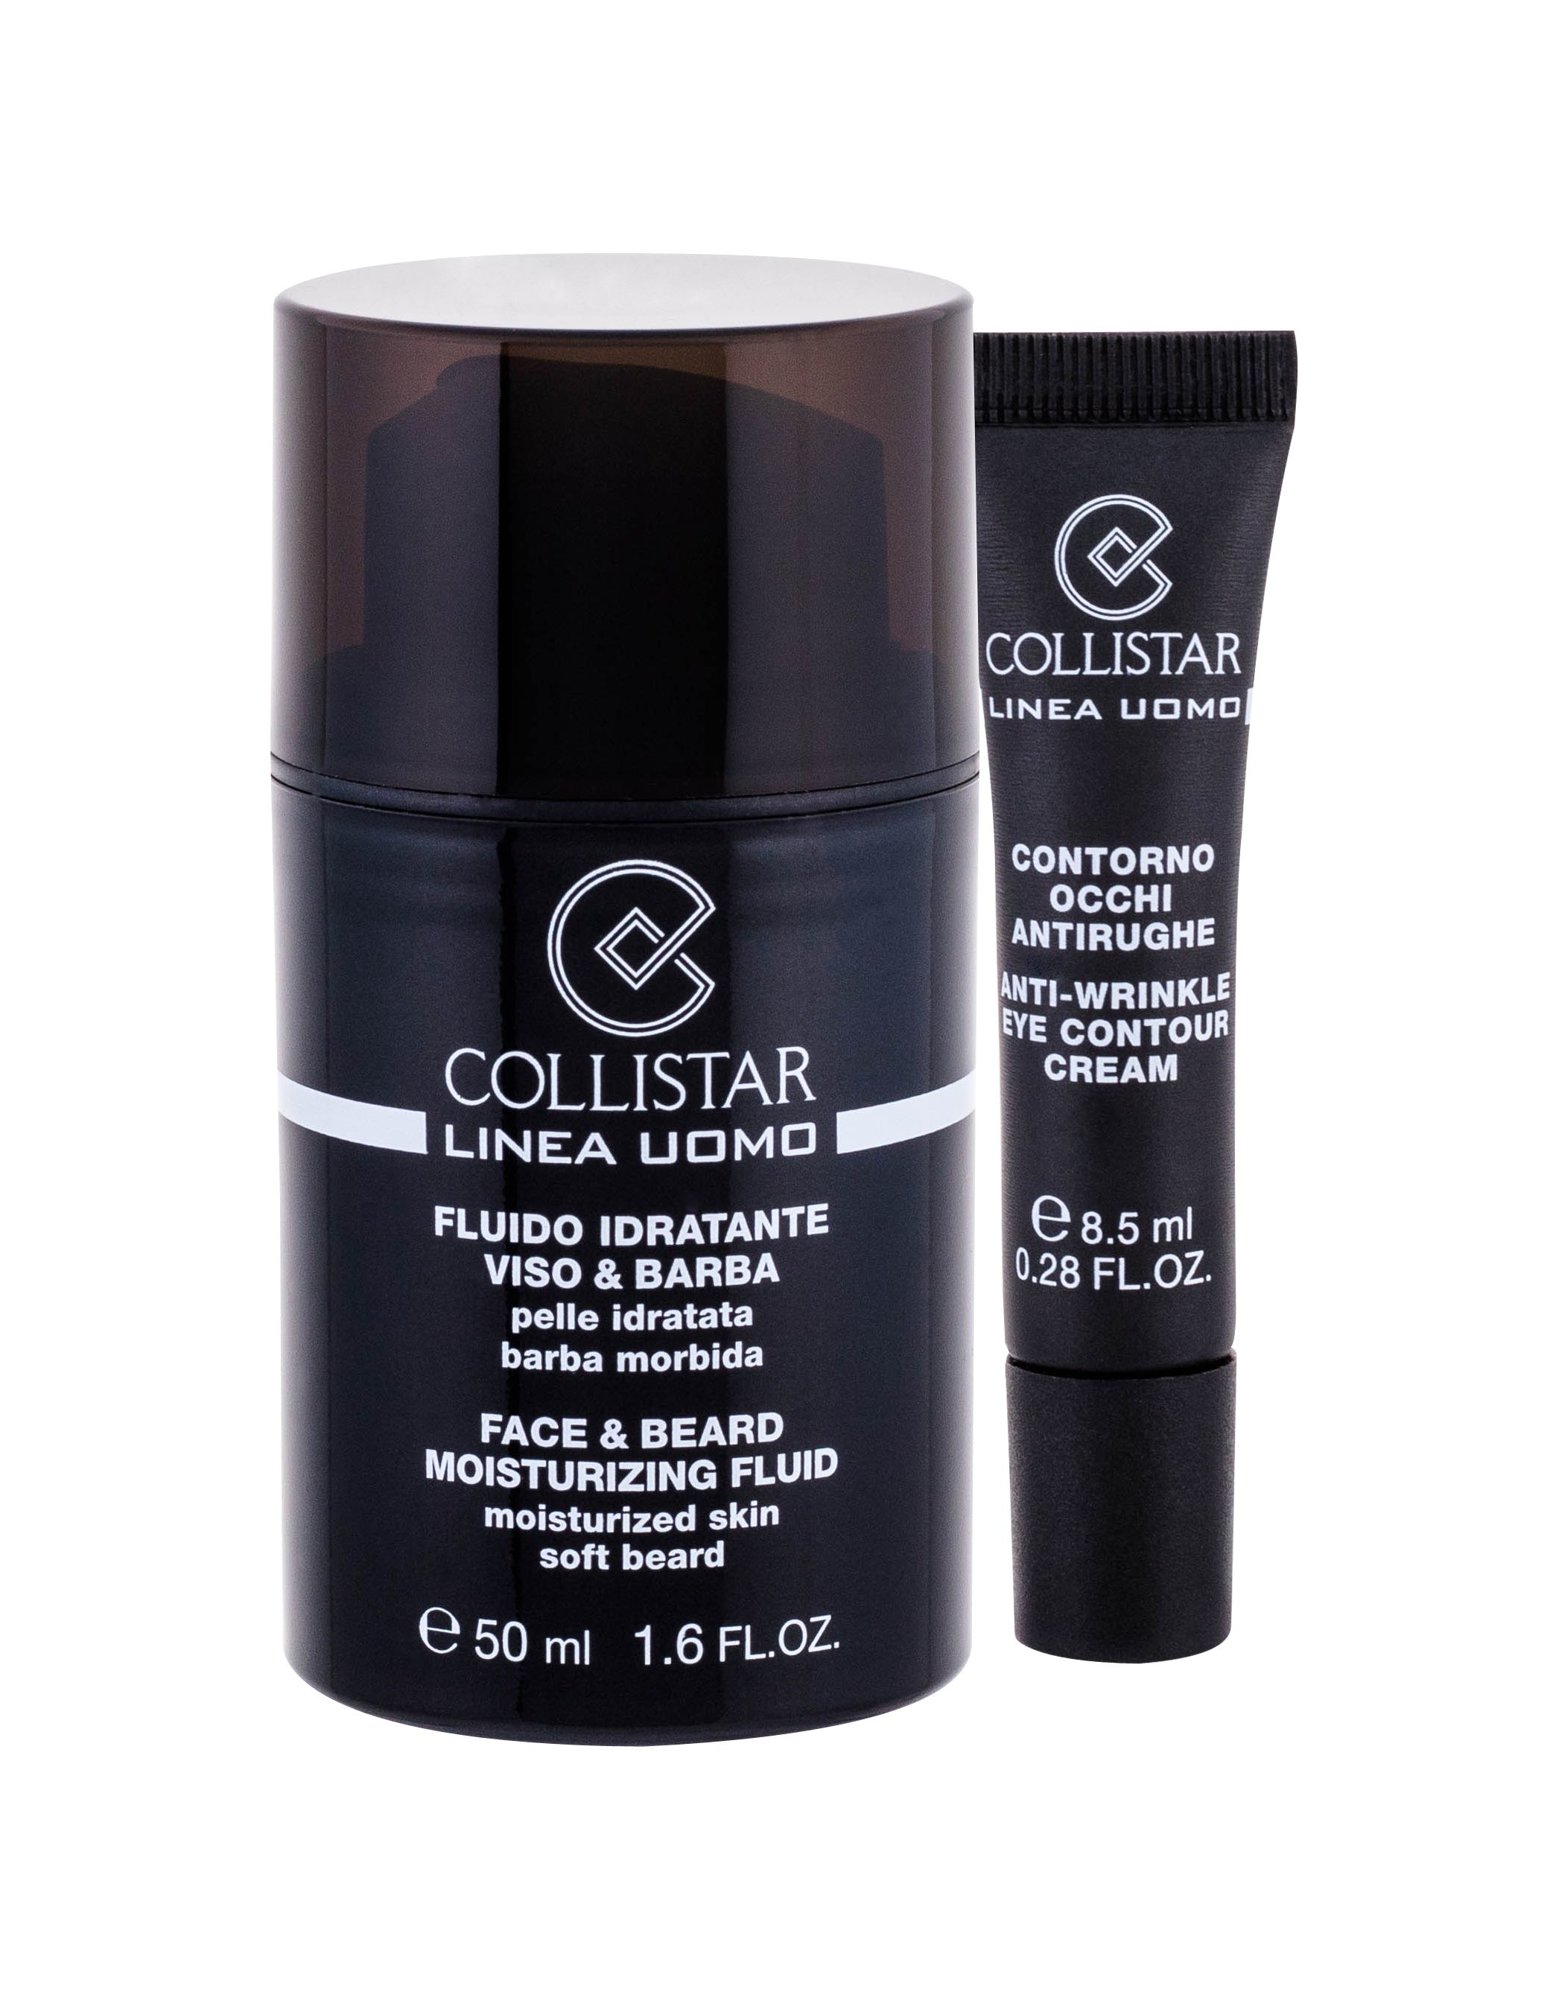 Collistar Linea Uomo Face & Beard 50ml Moisturizing Fluid 50 ml + Anti-Wrinkle Eye Contour Cream 8,5 ml veido gelis Rinkinys